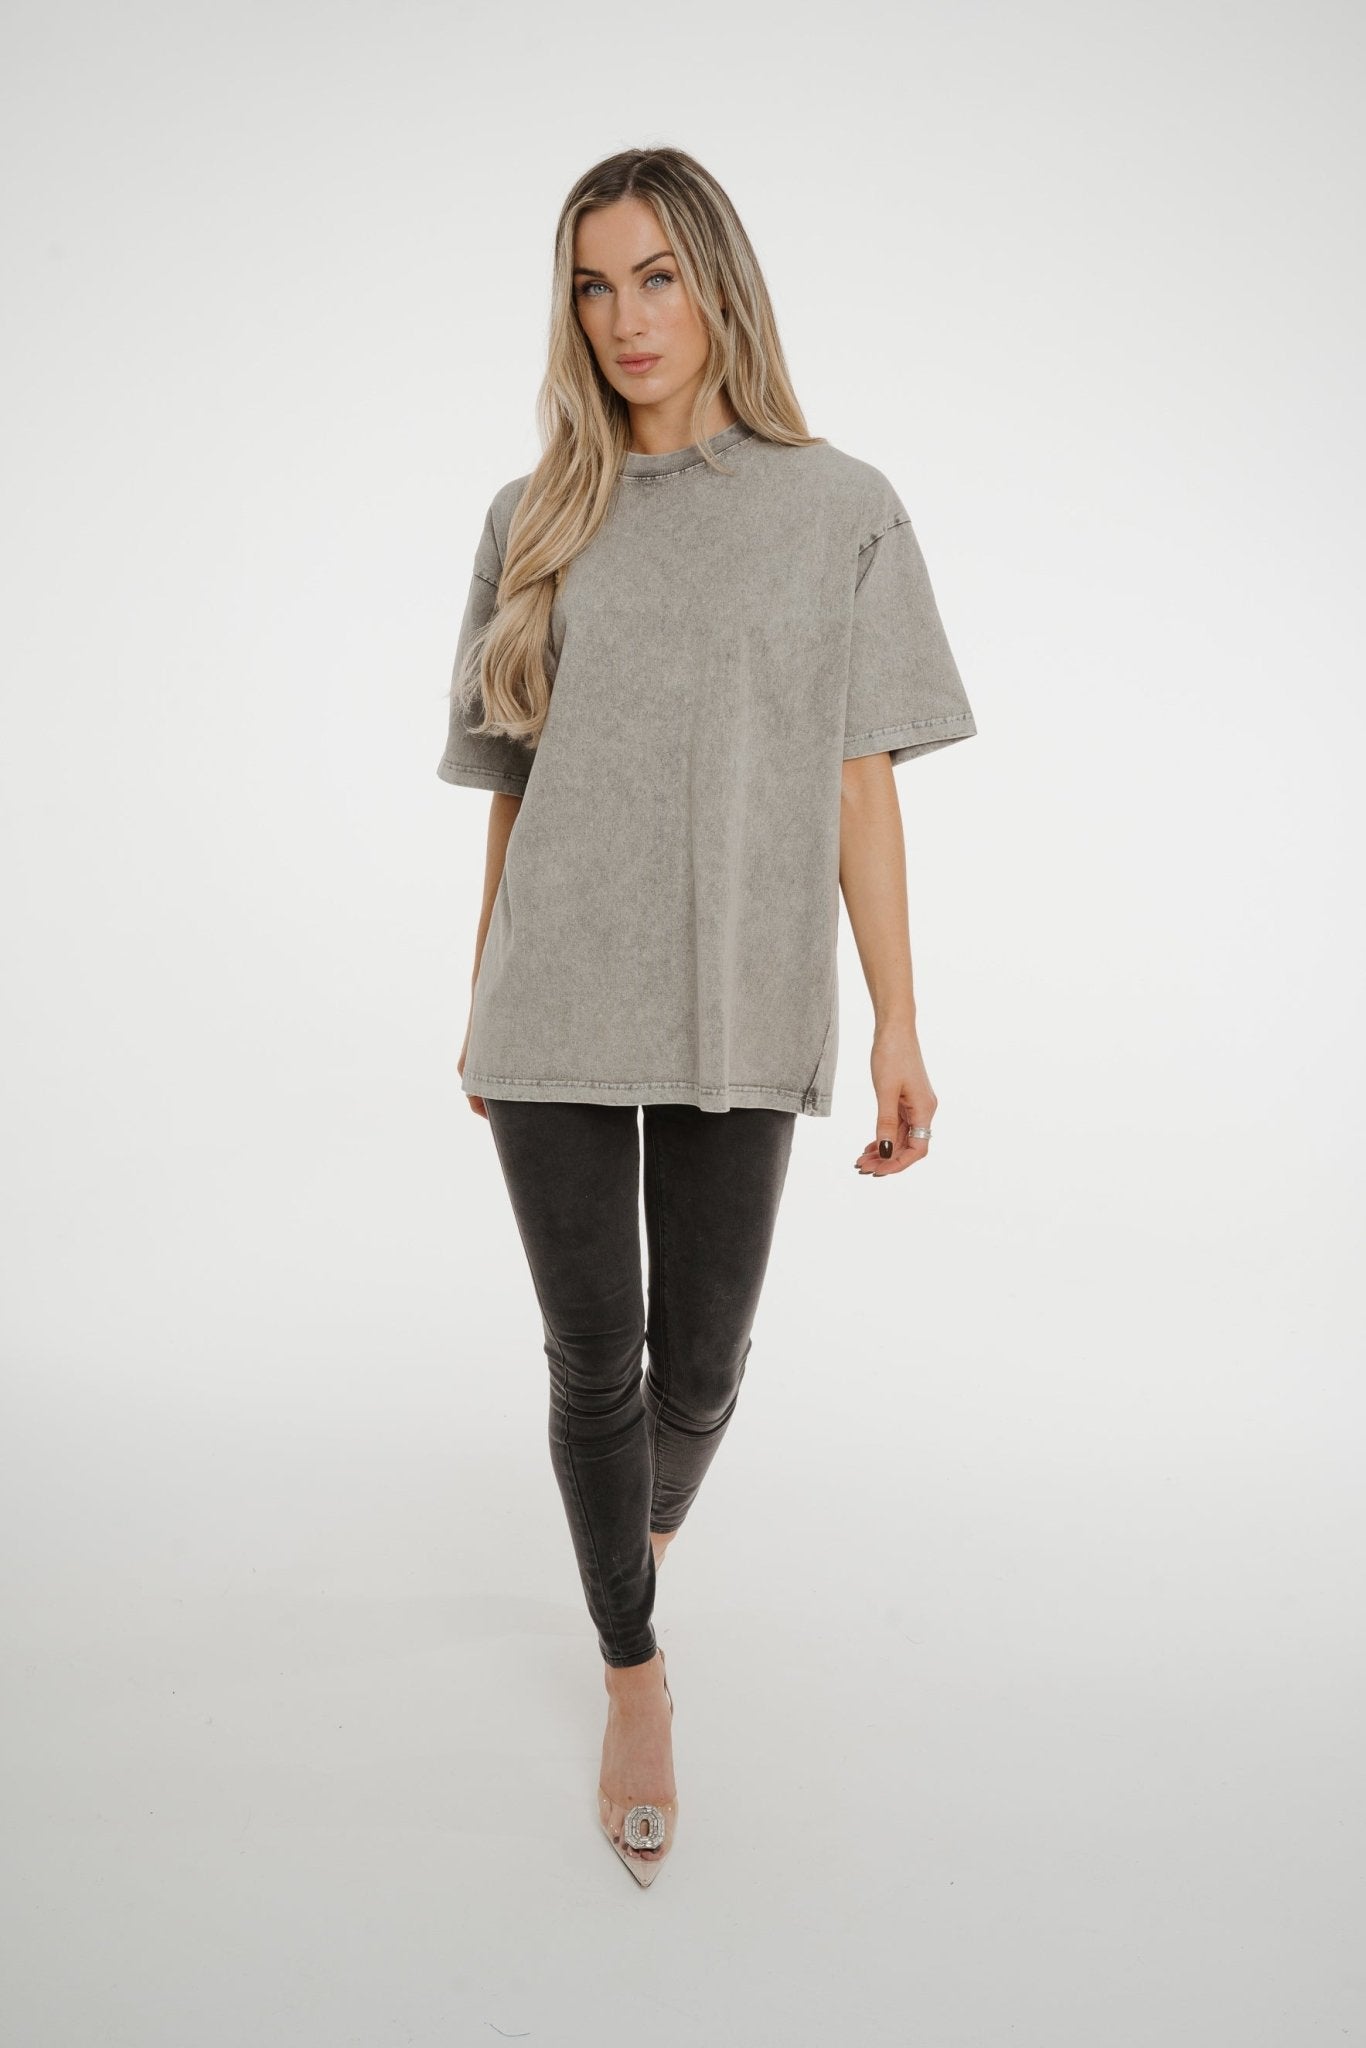 Jane Oversized T-Shirt In Grey Wash - The Walk in Wardrobe